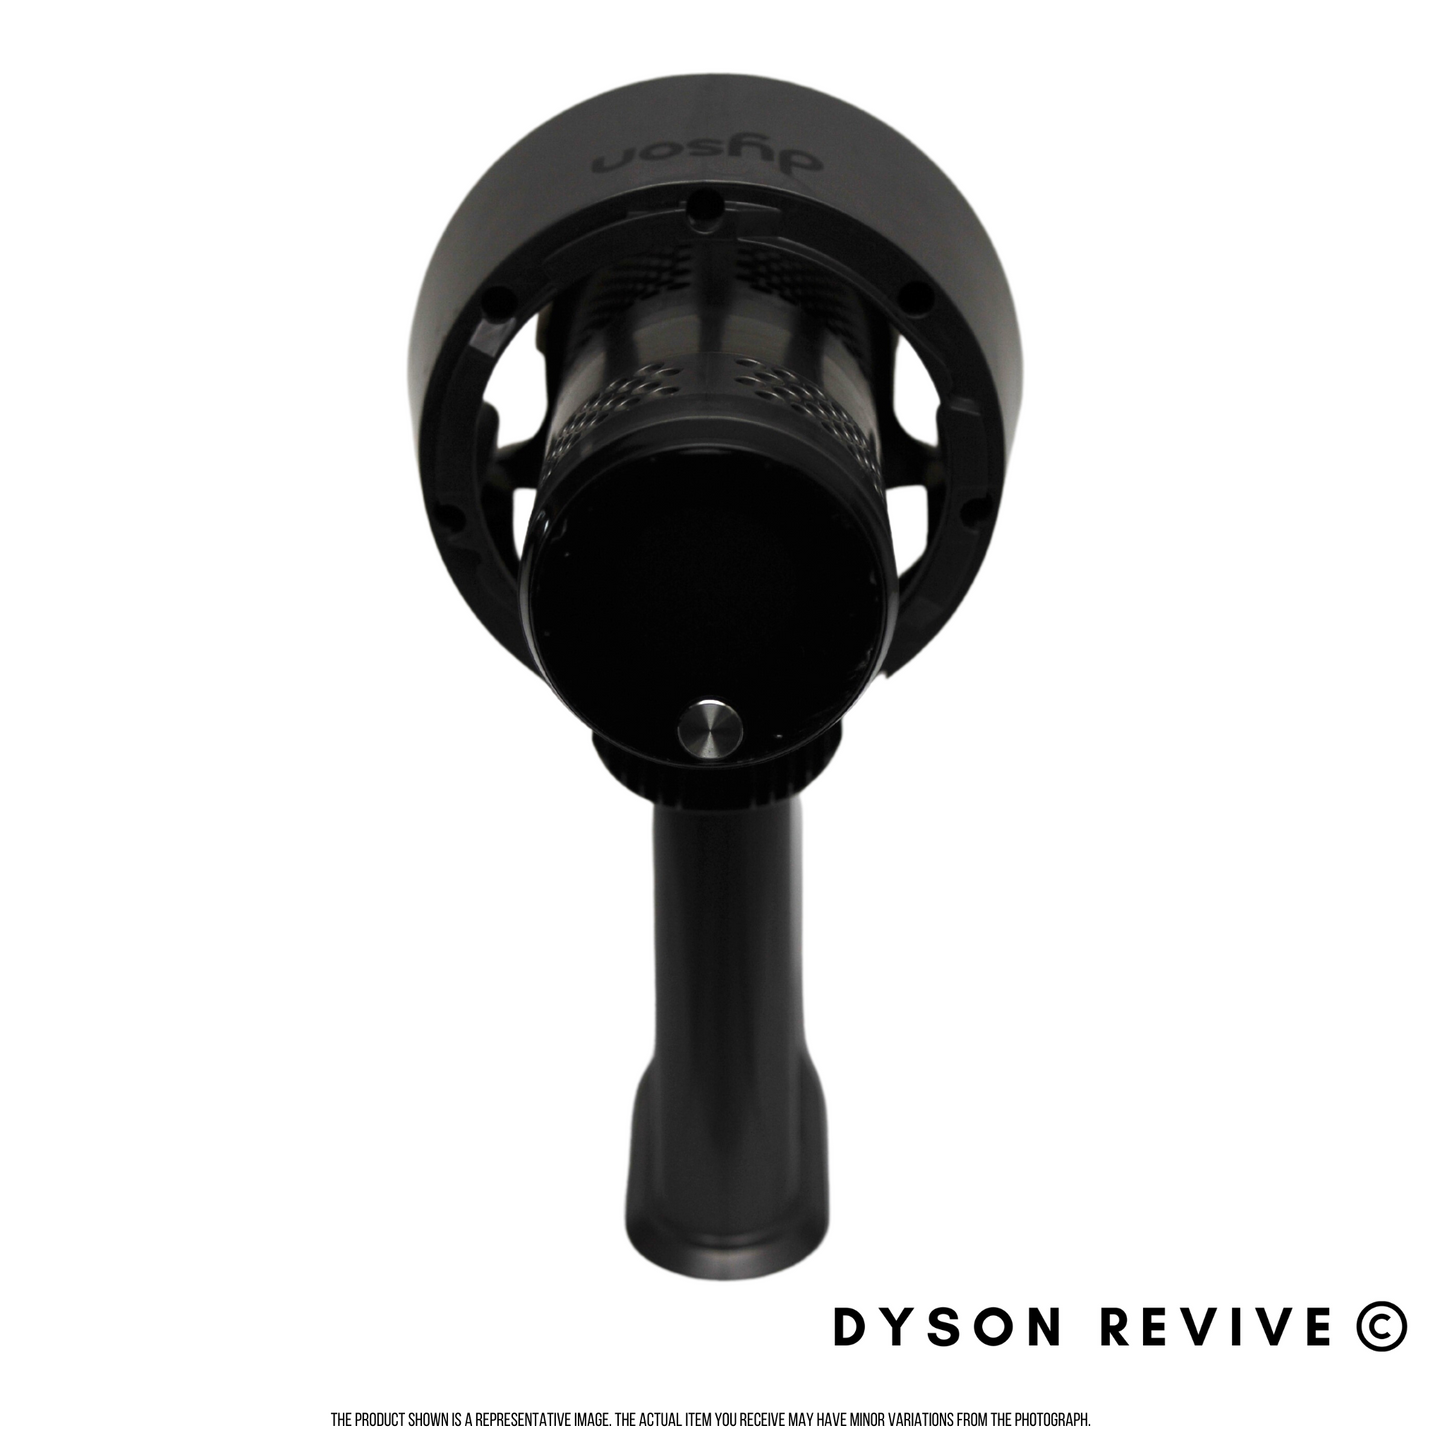 Genuine Refurbished Dyson V11 SV16 Outsize MAIN BODY HANDLE & MOTOR - Dyson Revive